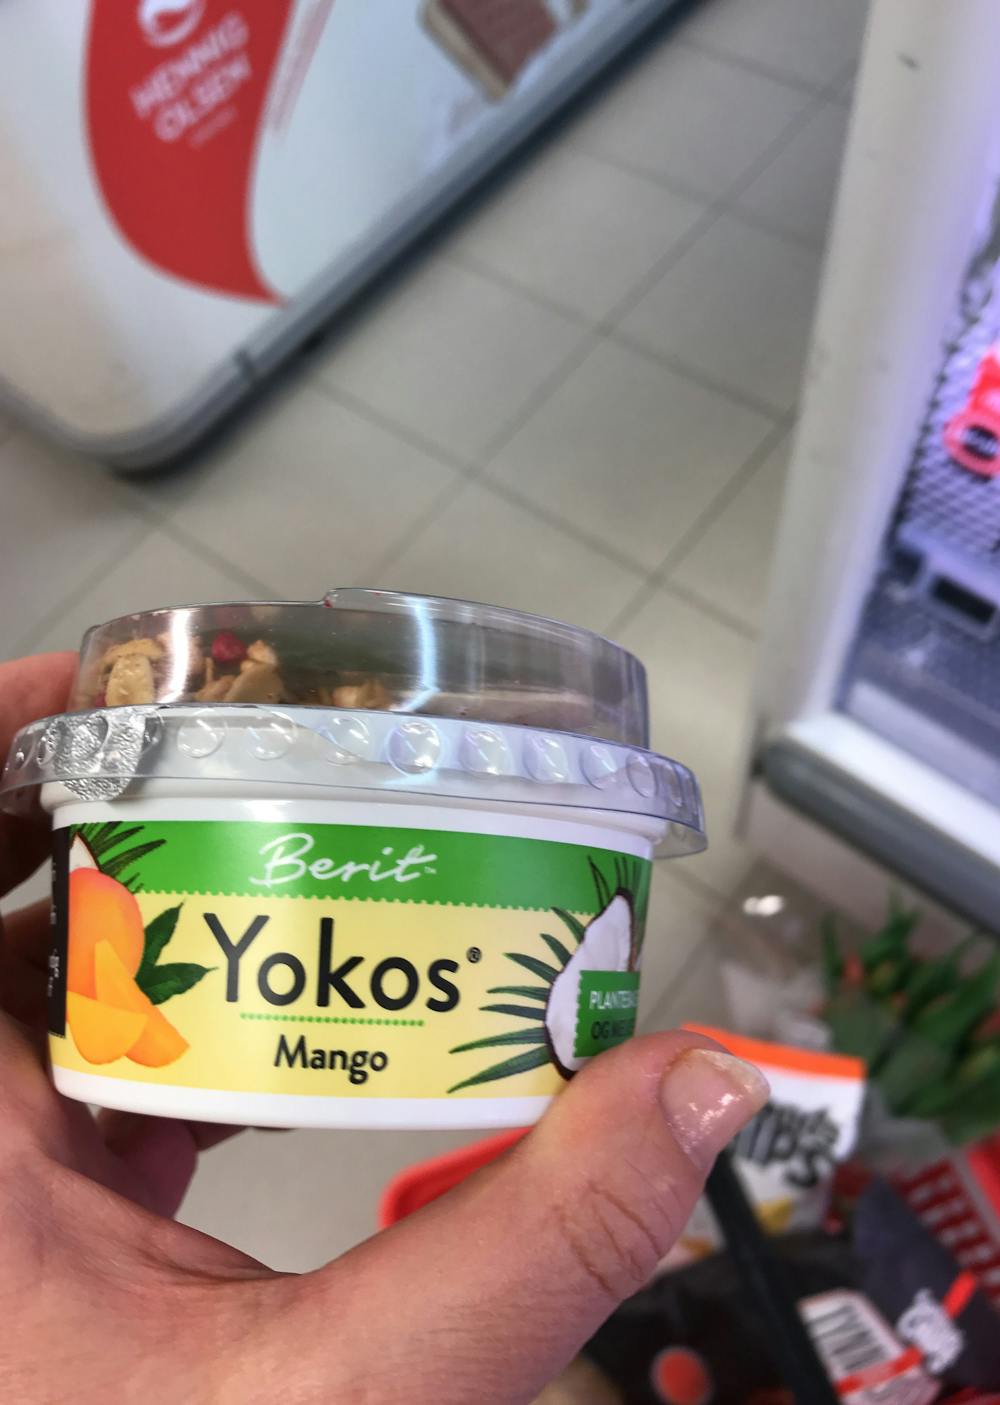 Yokos, mango, Made by Berit Nordstrand